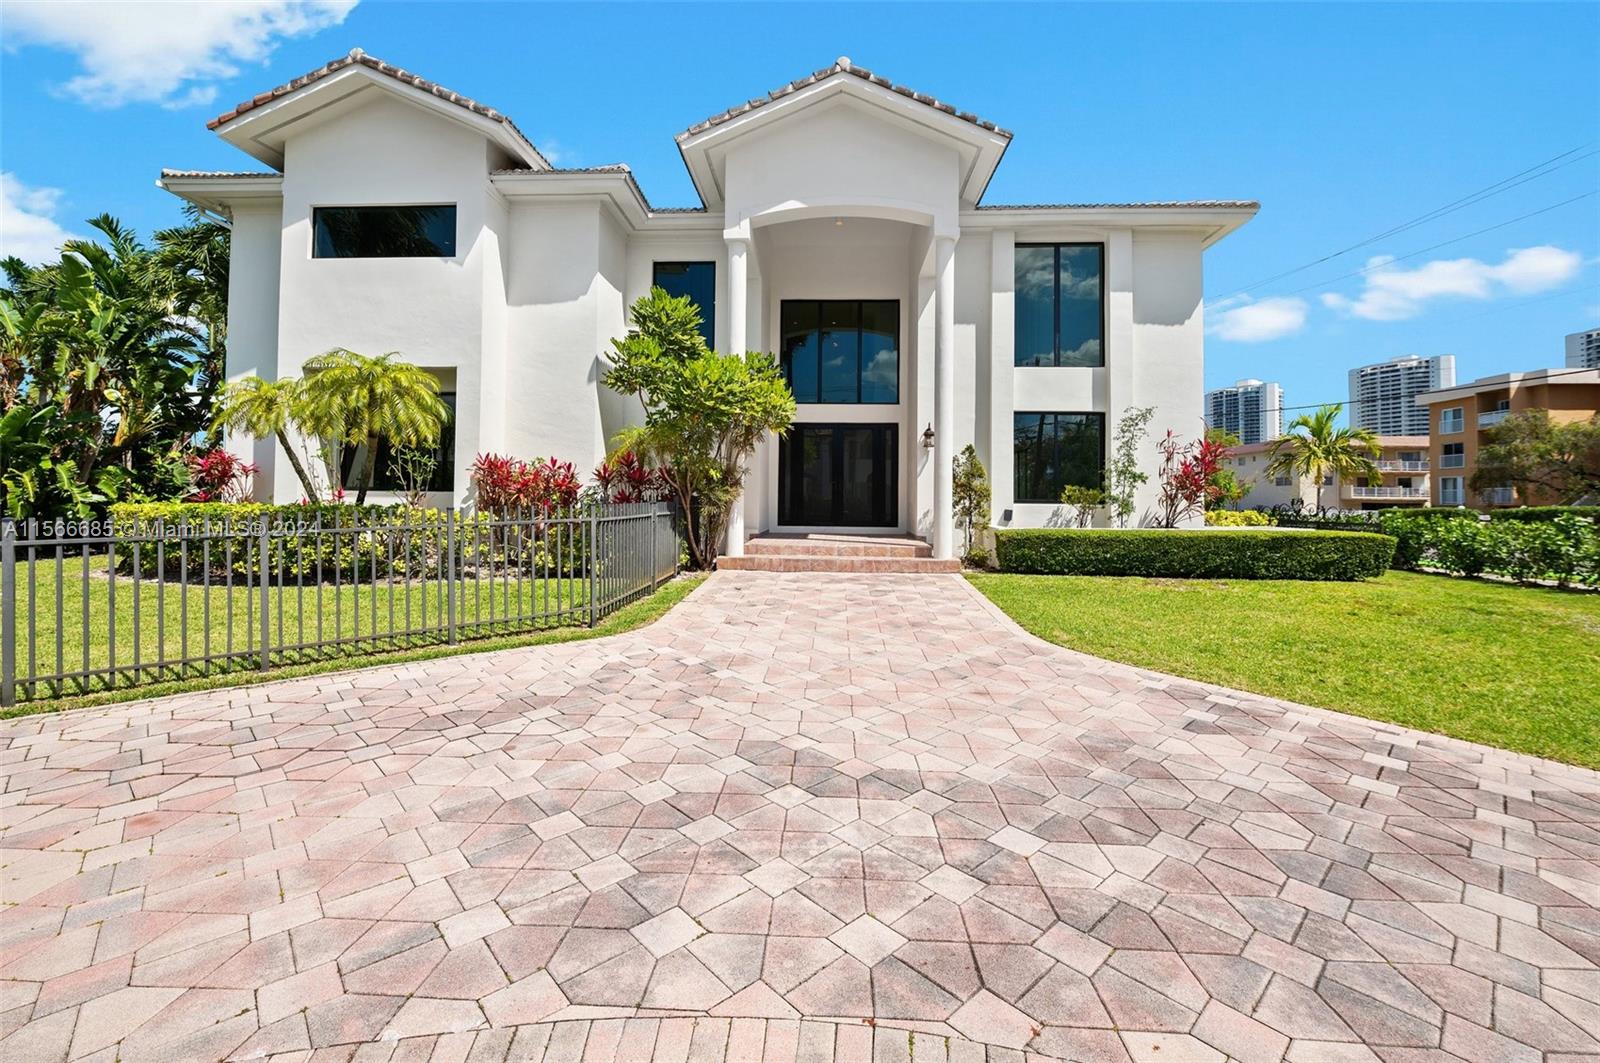 Property for Sale at 3461 Ne 170th St, North Miami Beach, Miami-Dade County, Florida - Bedrooms: 5 
Bathrooms: 6.5  - $5,200,000